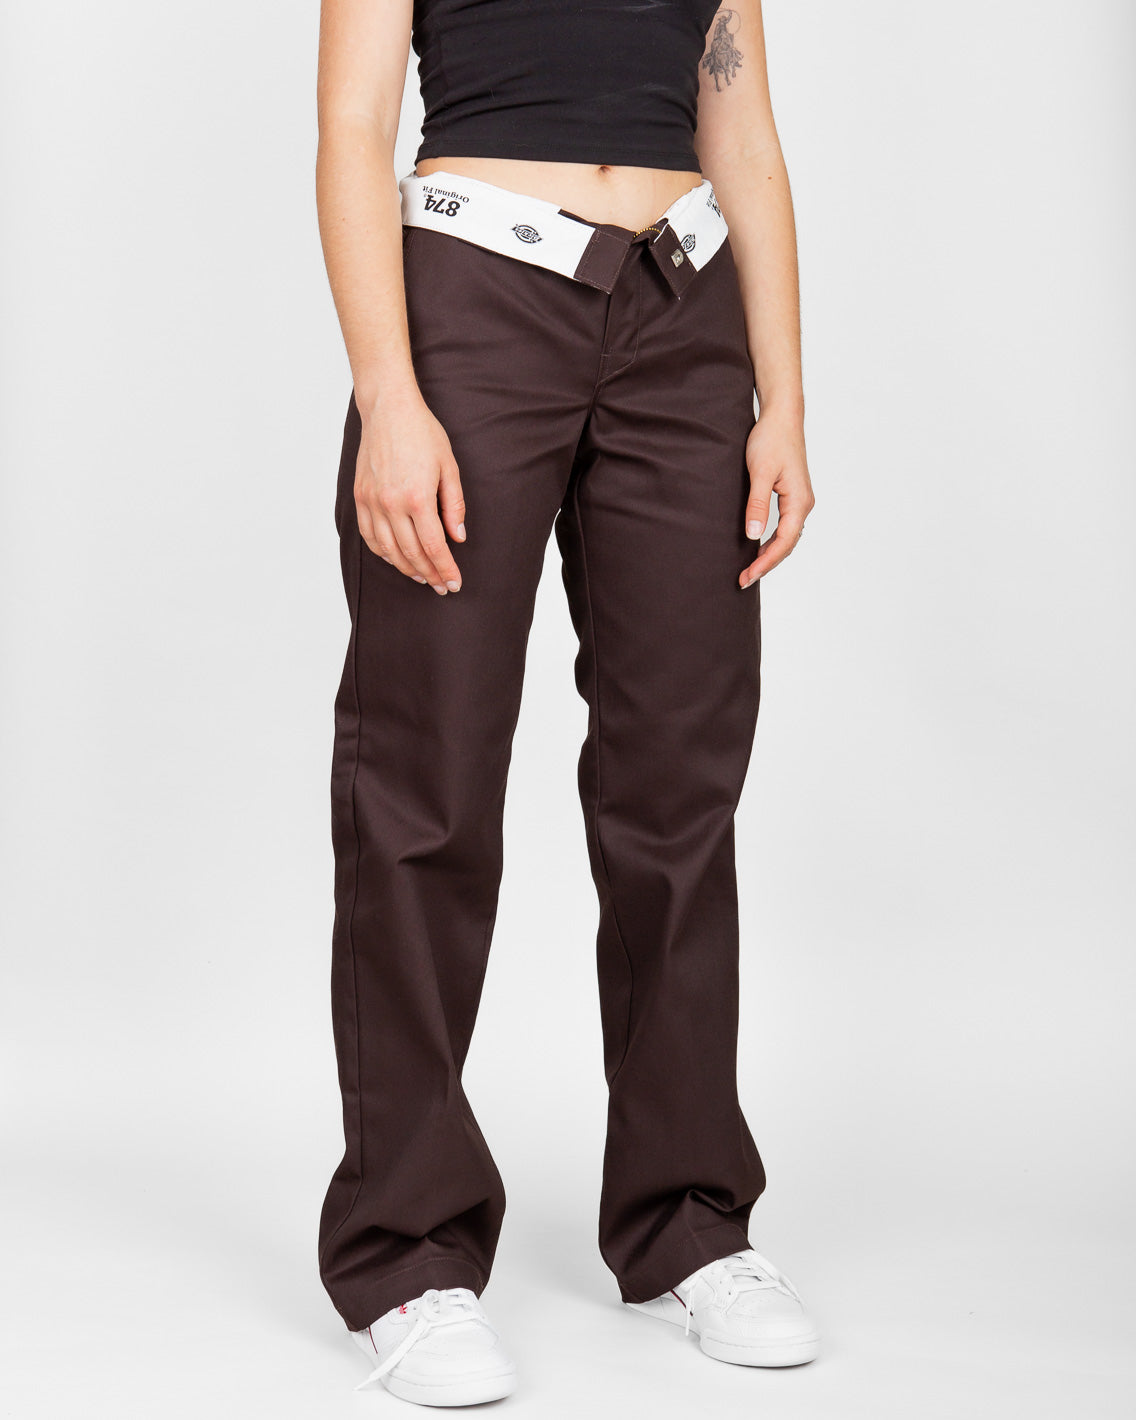 Dickies - 874 Original Fit Work Pants - Dark Brown